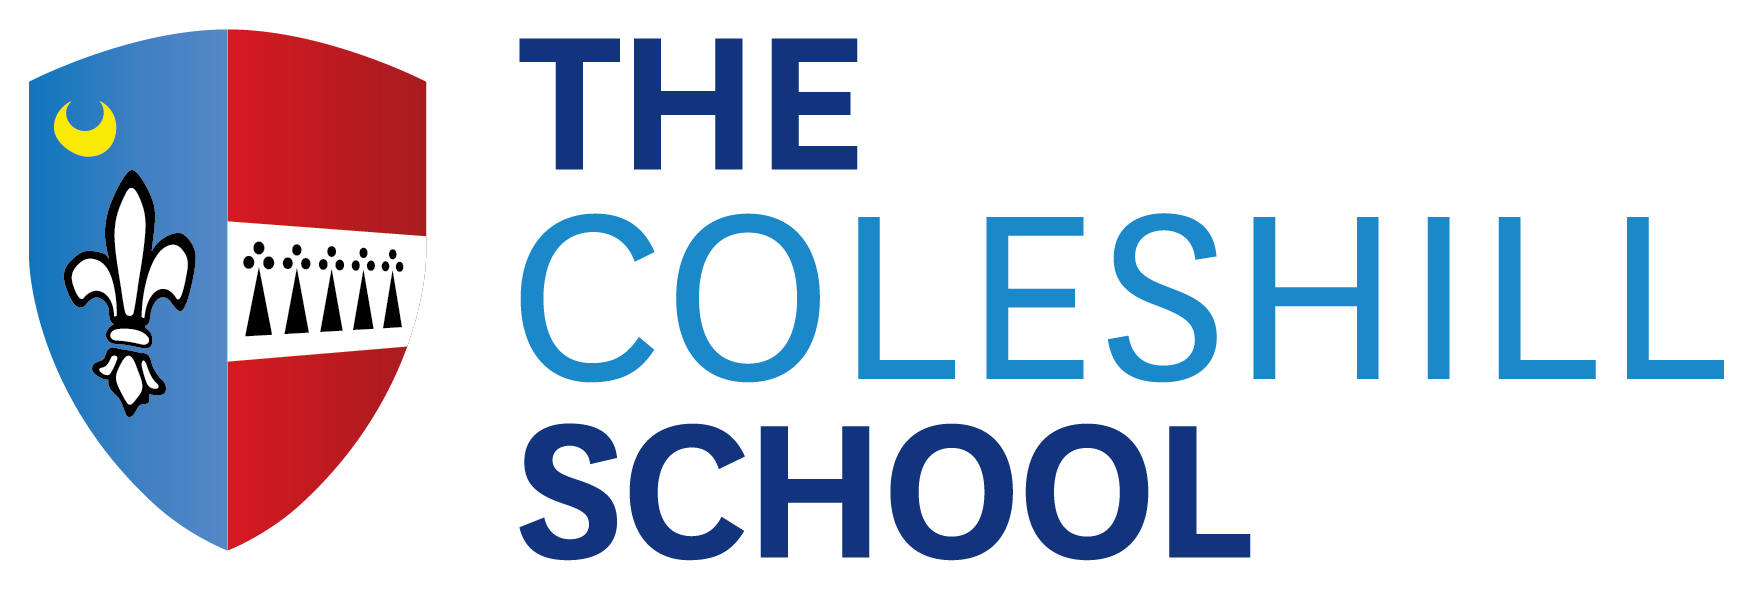 The Coleshill School Branding - Logo